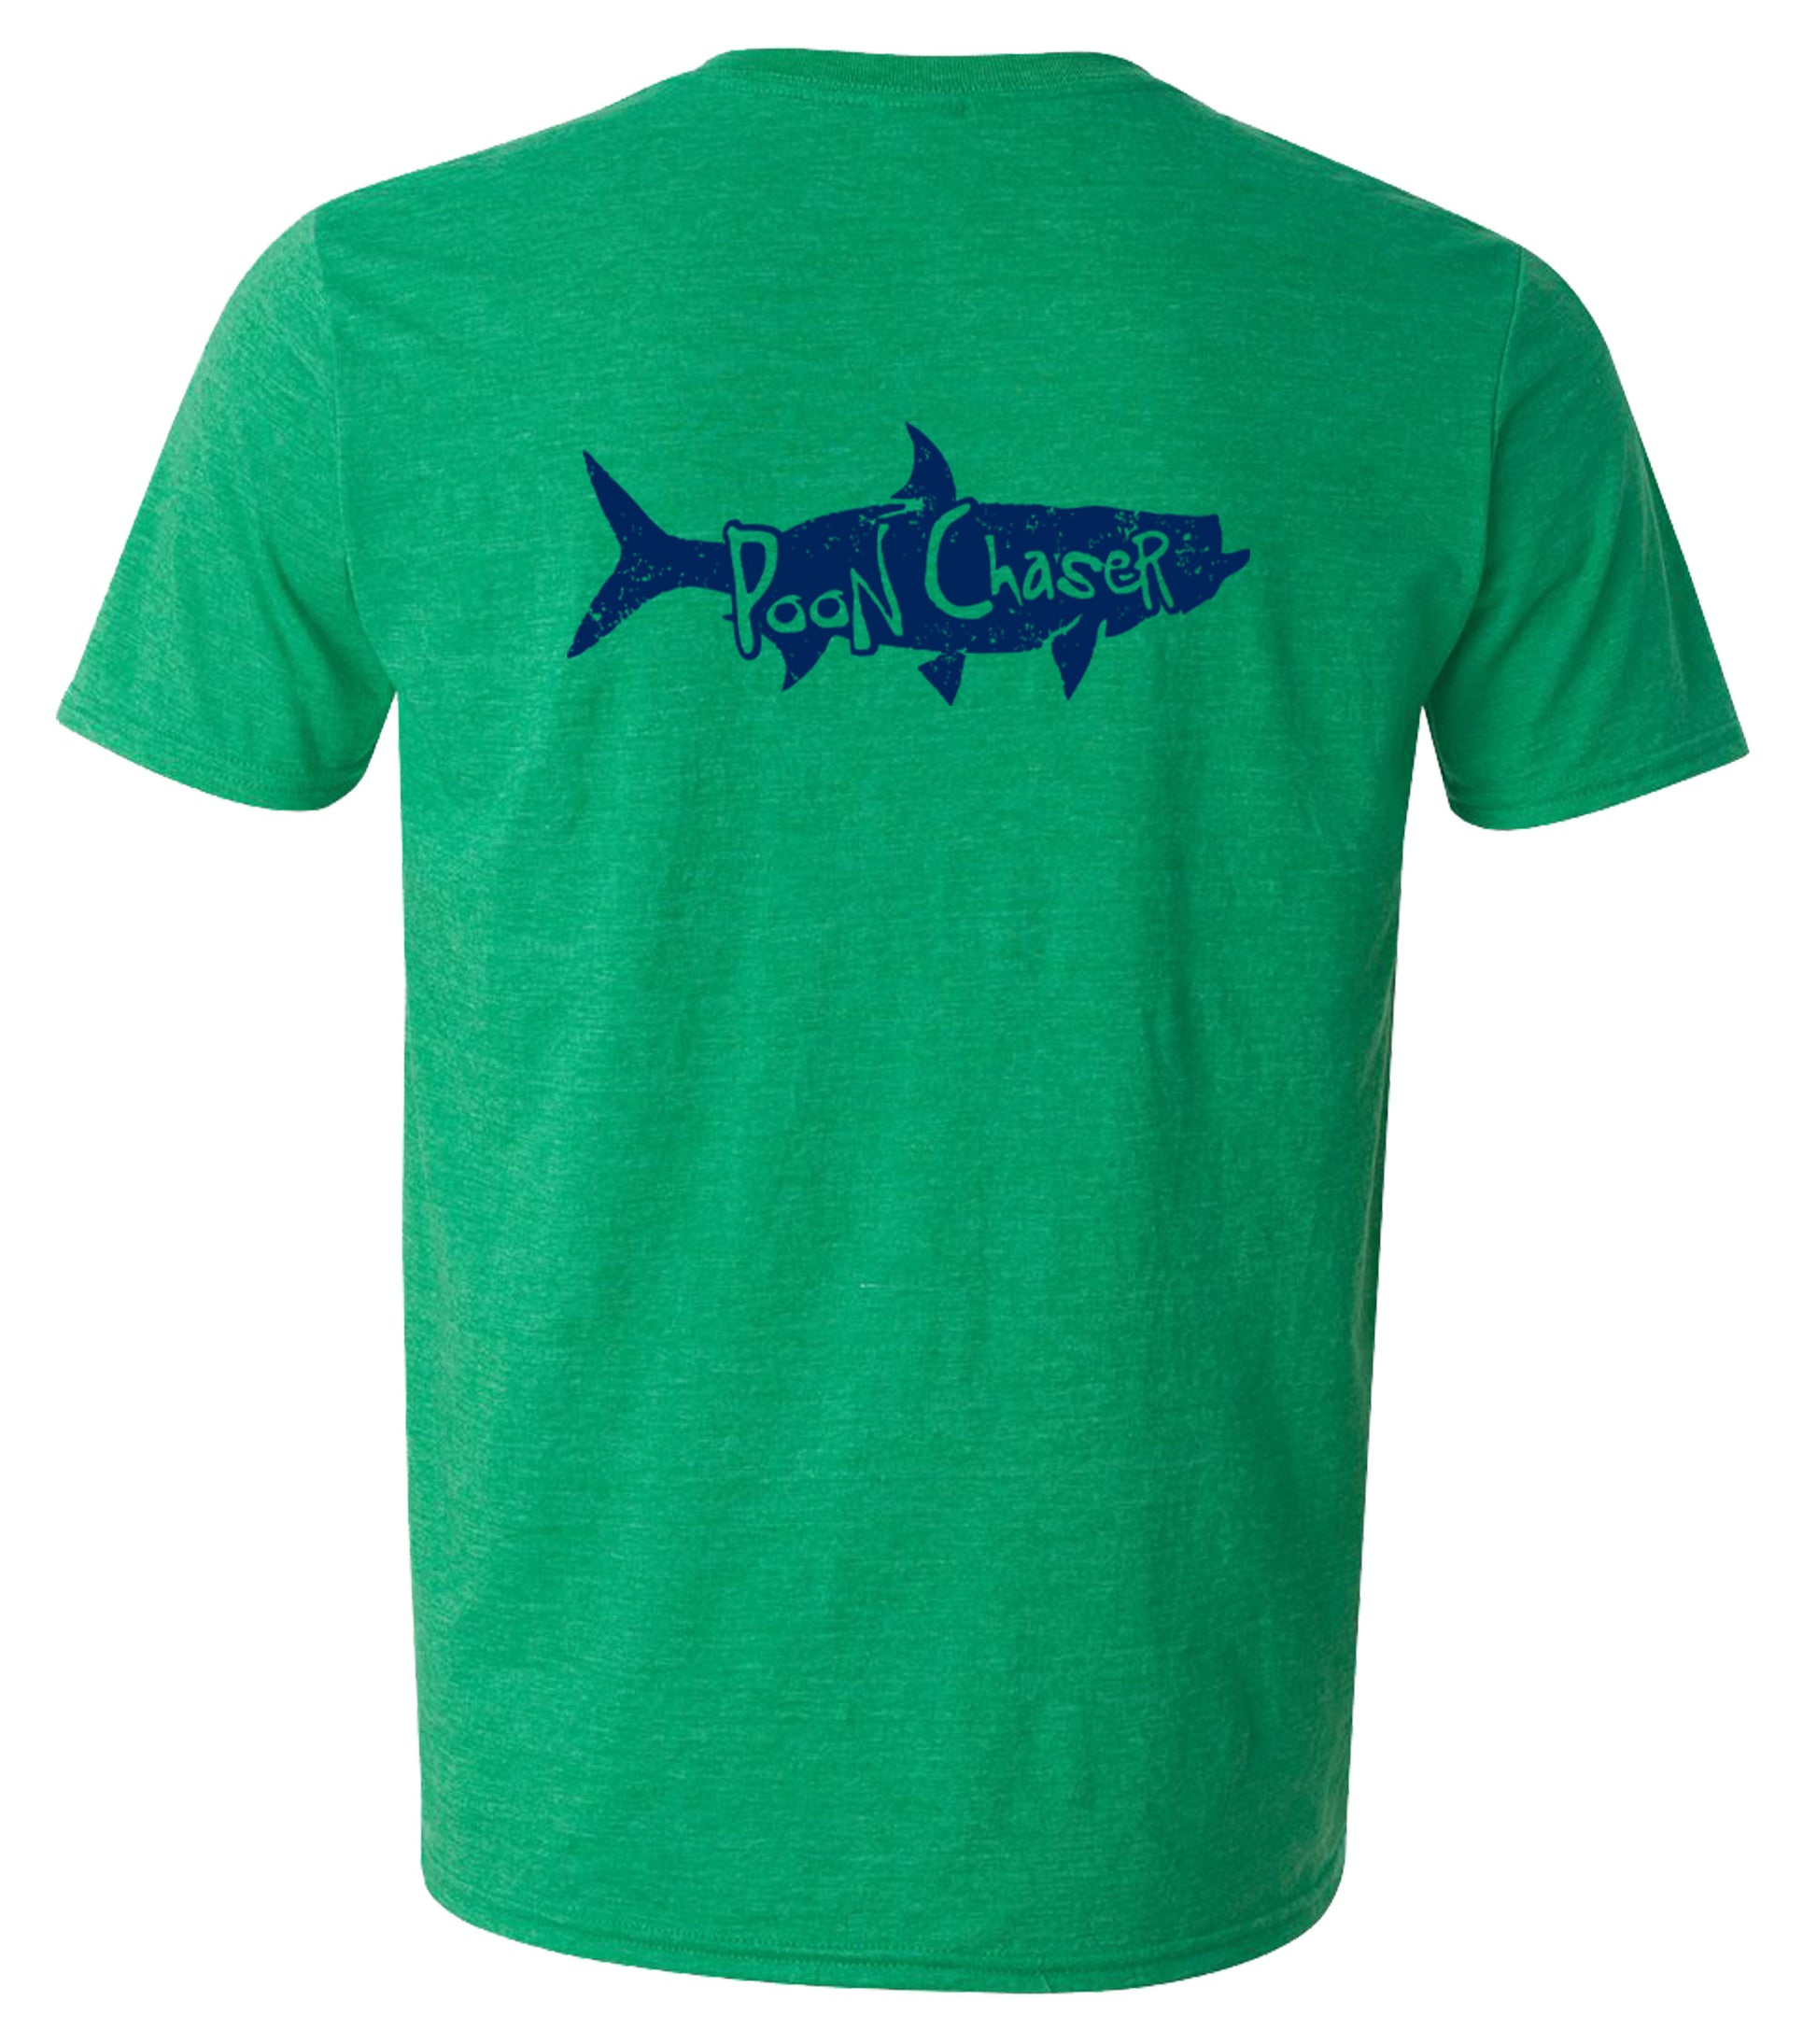 Tarpon "Poon Chaser" Reel Fishy t-shirt - Hthr Green w/Navy logo